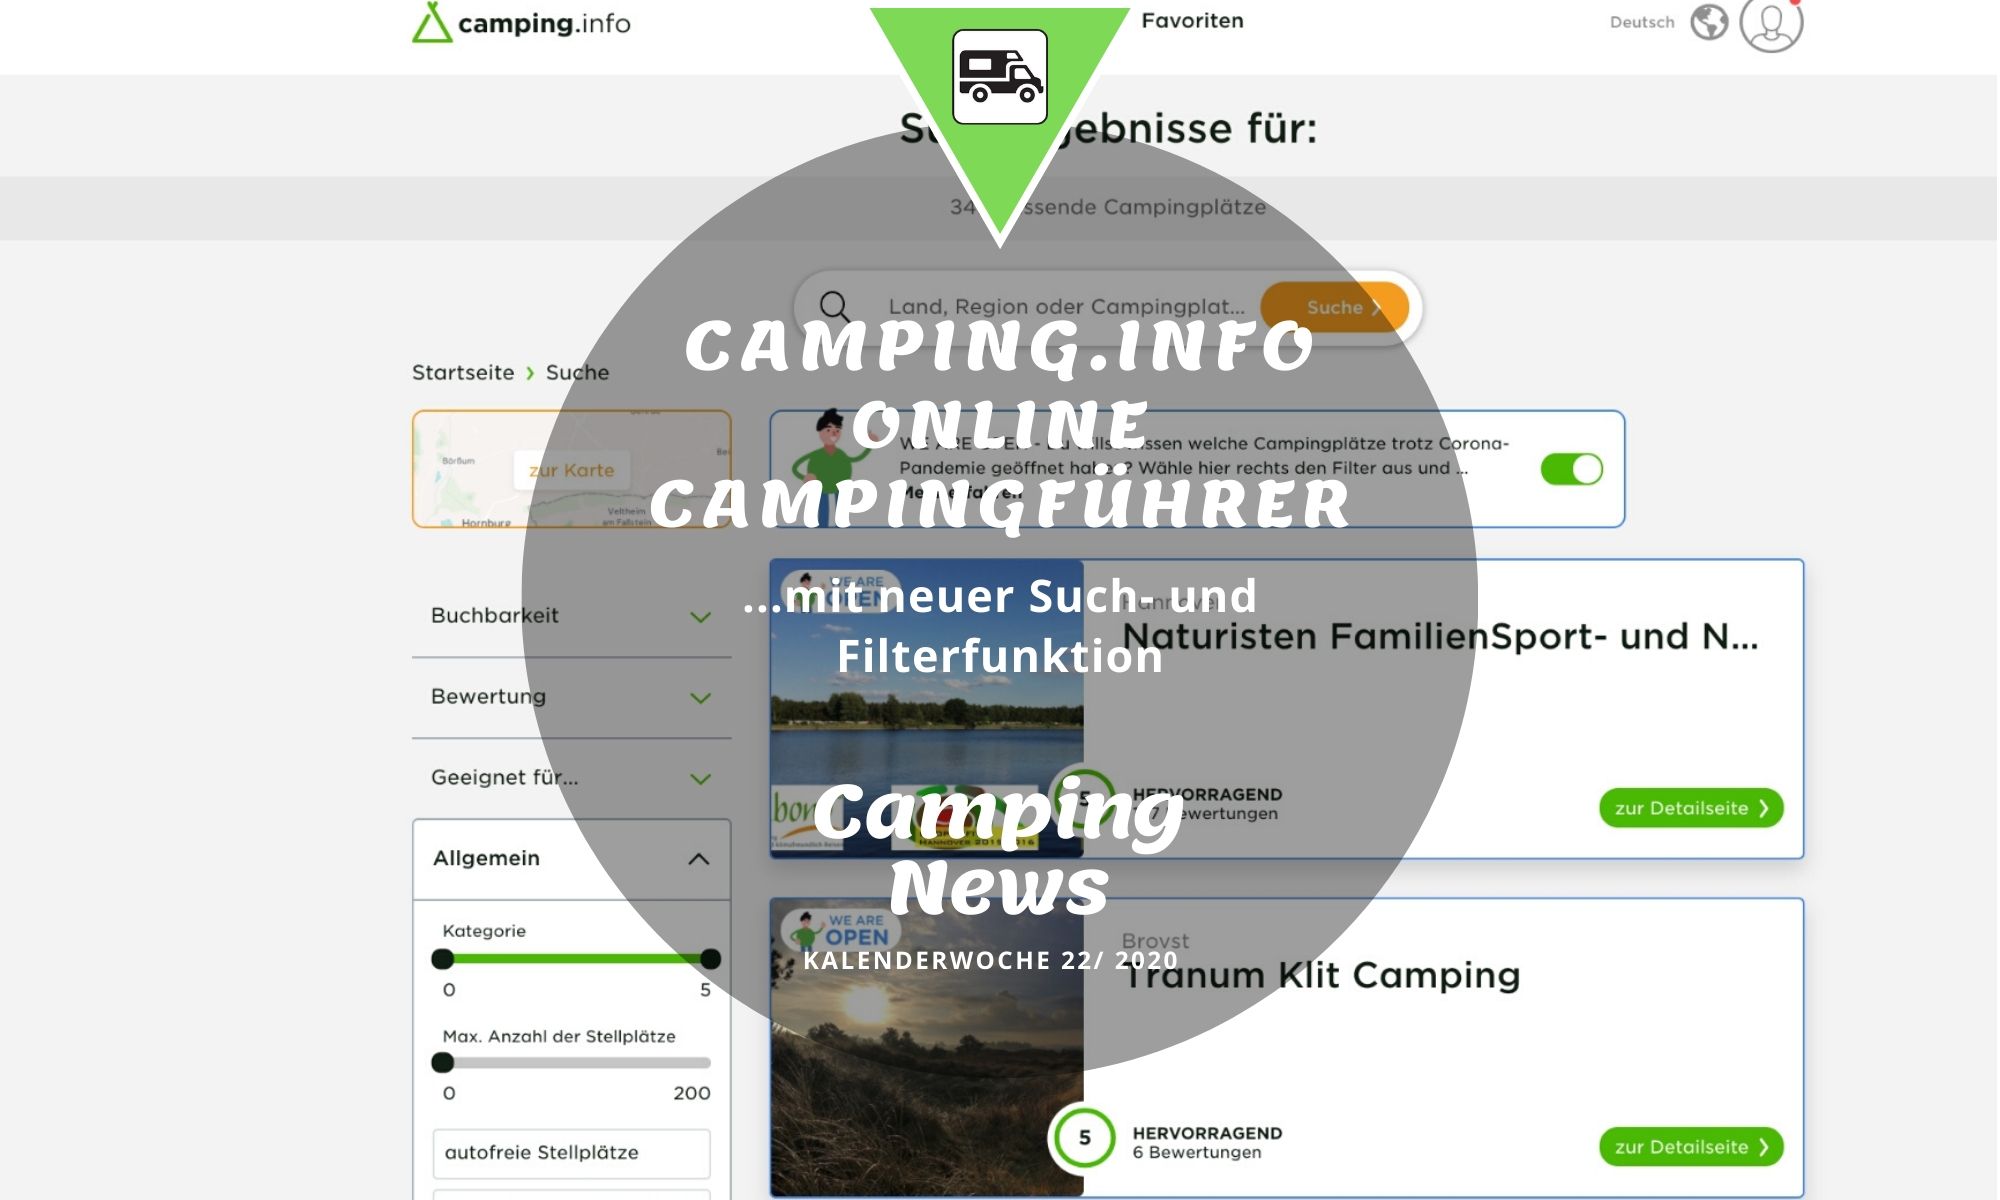 Camping News Wochenrückblick – KW22/2020